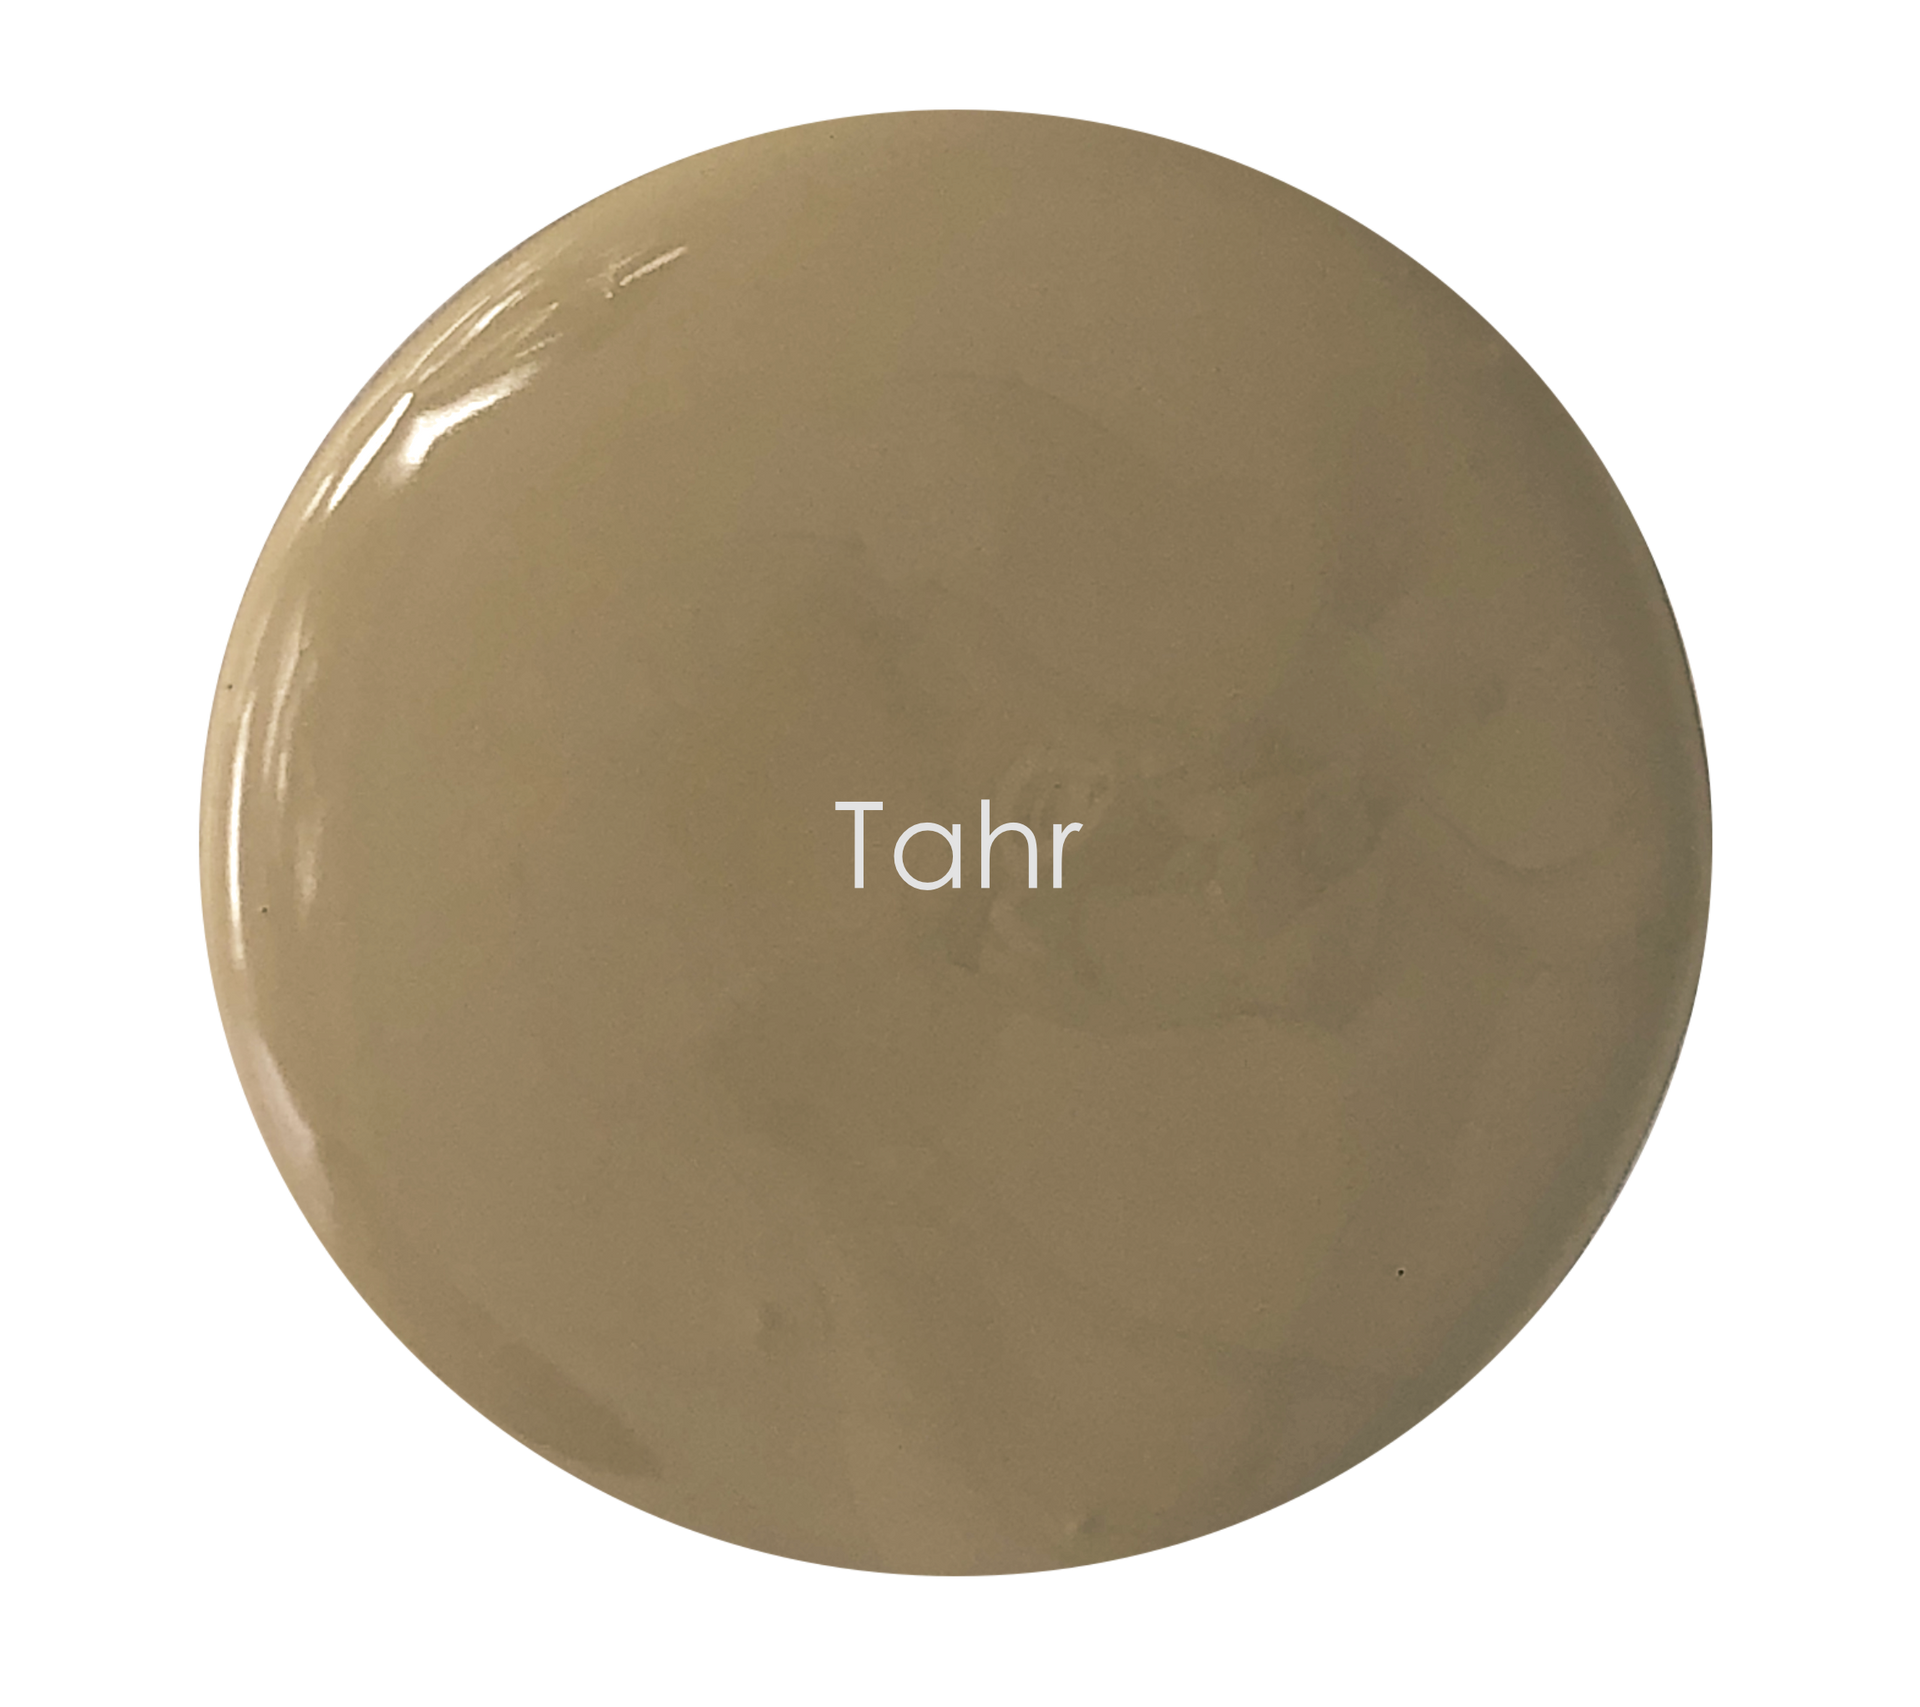 Tahr - Premium Chalk Paint